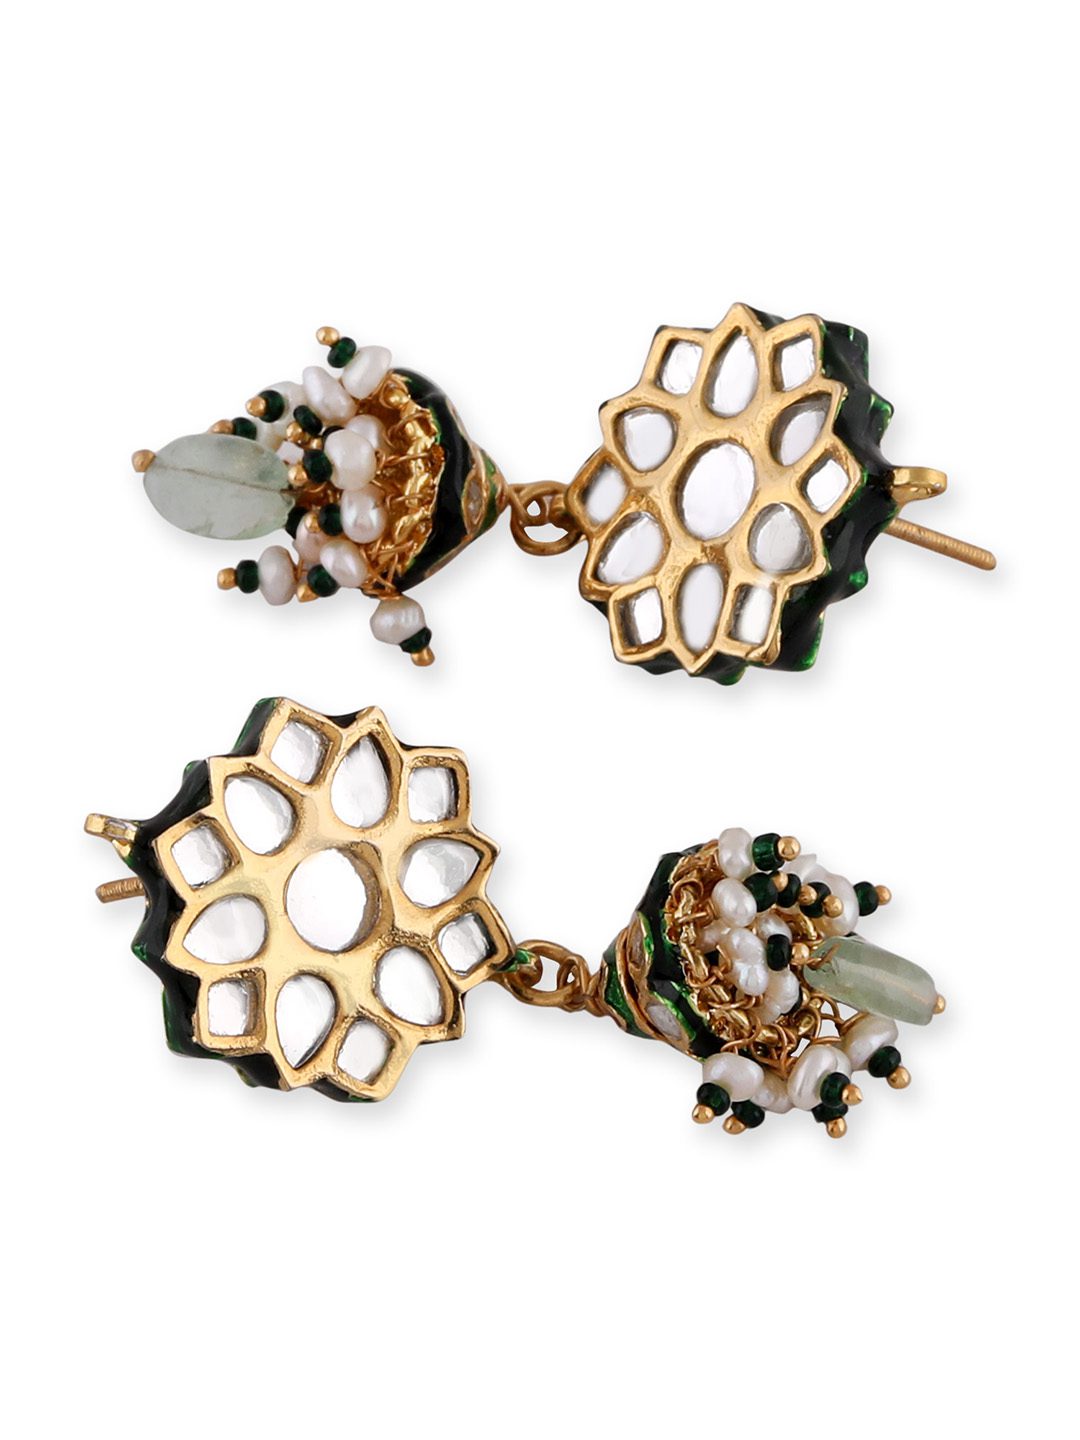 Sumptuous Silver Mint Green Kundan Necklace set